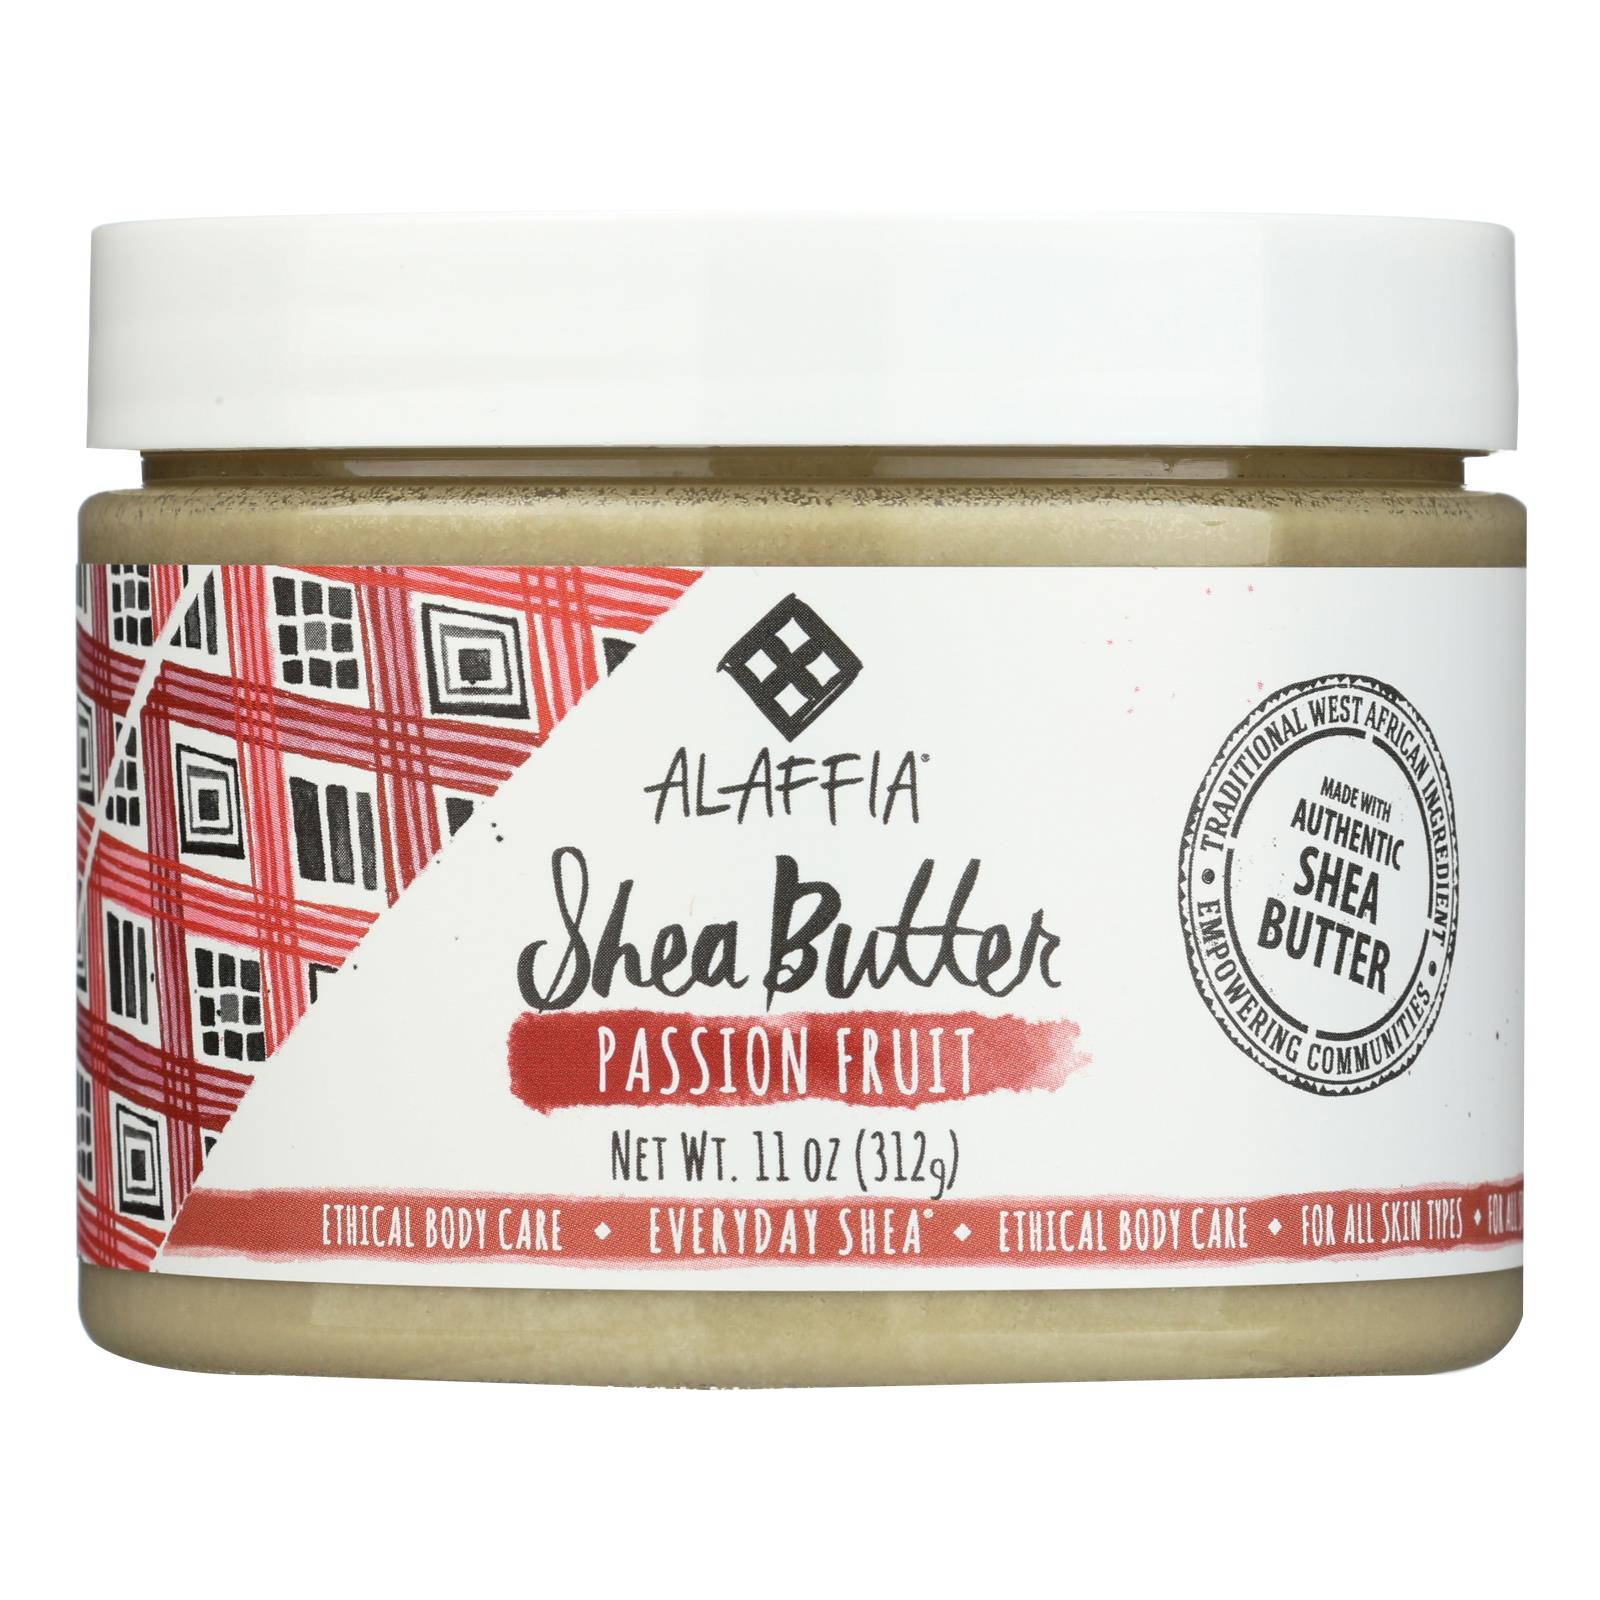 Alaffia Everyday Shea Passionfruit Shea Butter Lotion - 1 Each - 11 OZ